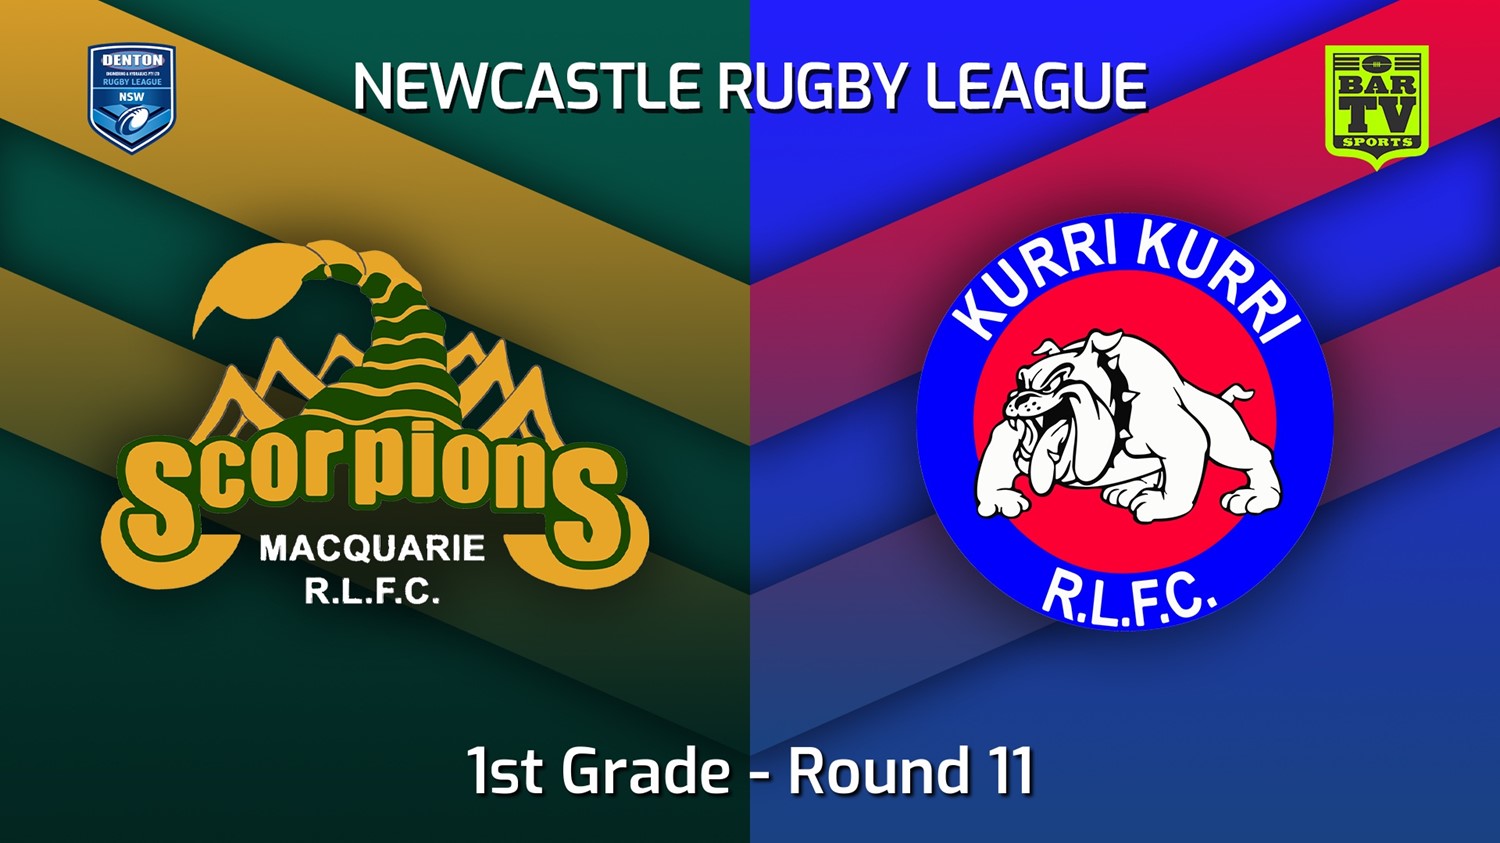 220612-Newcastle Round 11 - 1st Grade - Macquarie Scorpions v Kurri Kurri Bulldogs Slate Image